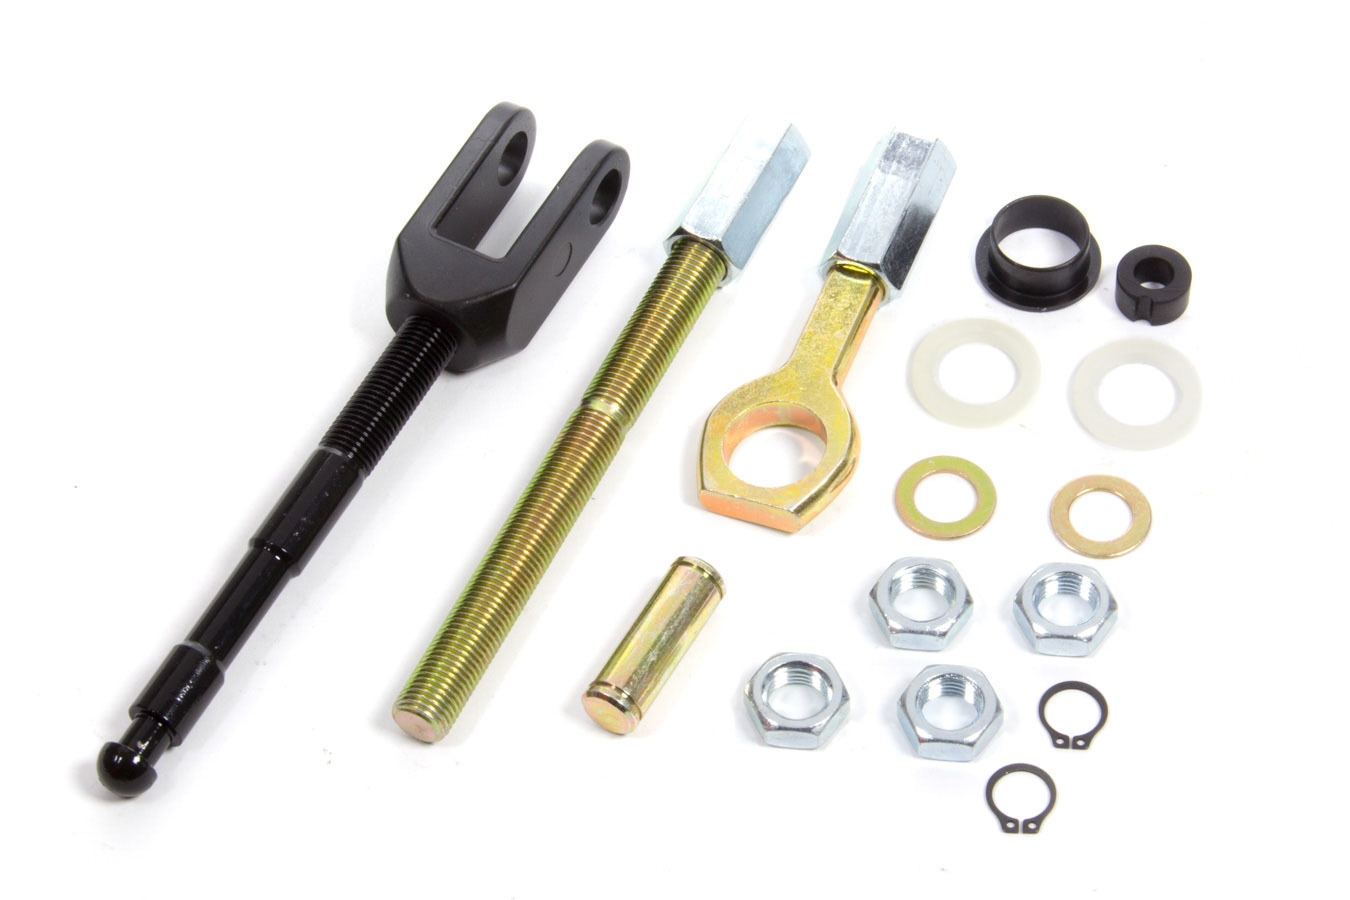 Wilwood 330-13914 Brake Pedal Rod, 3/8-24 in Thread, Clevis / Hardware / Pushrod Included, Steel, Black Paint, Kit